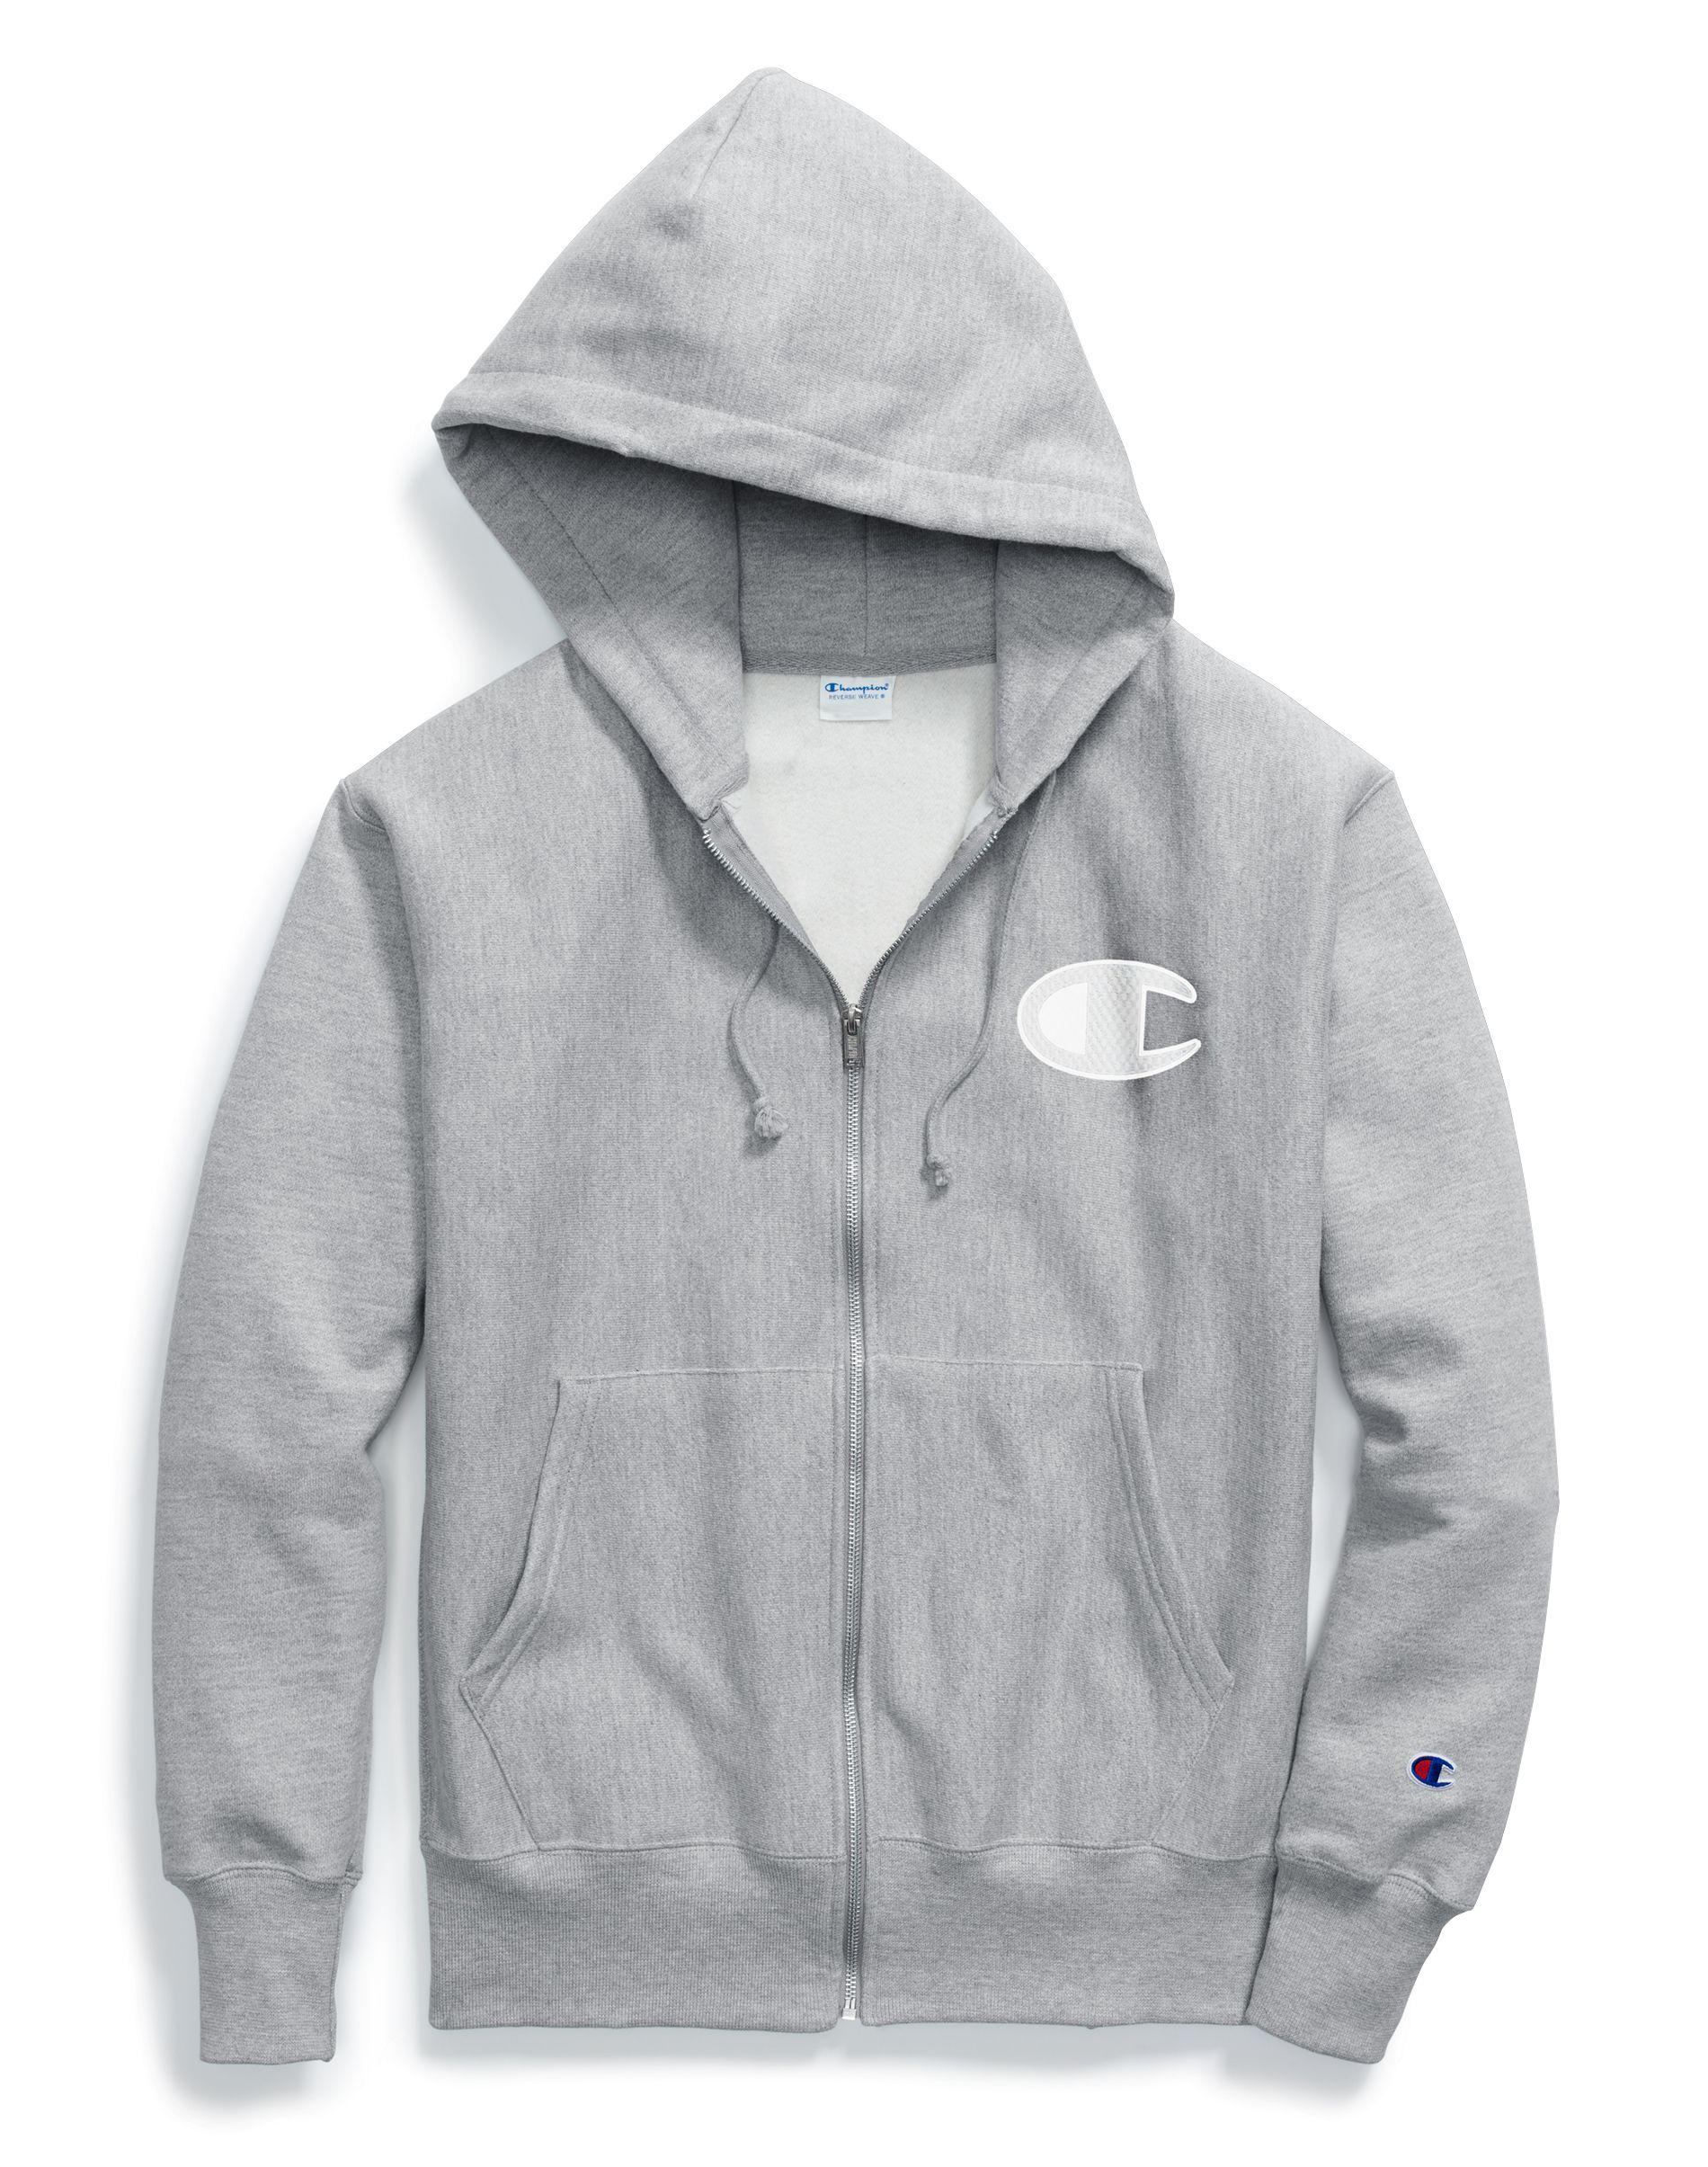 grey champion zip hoodie